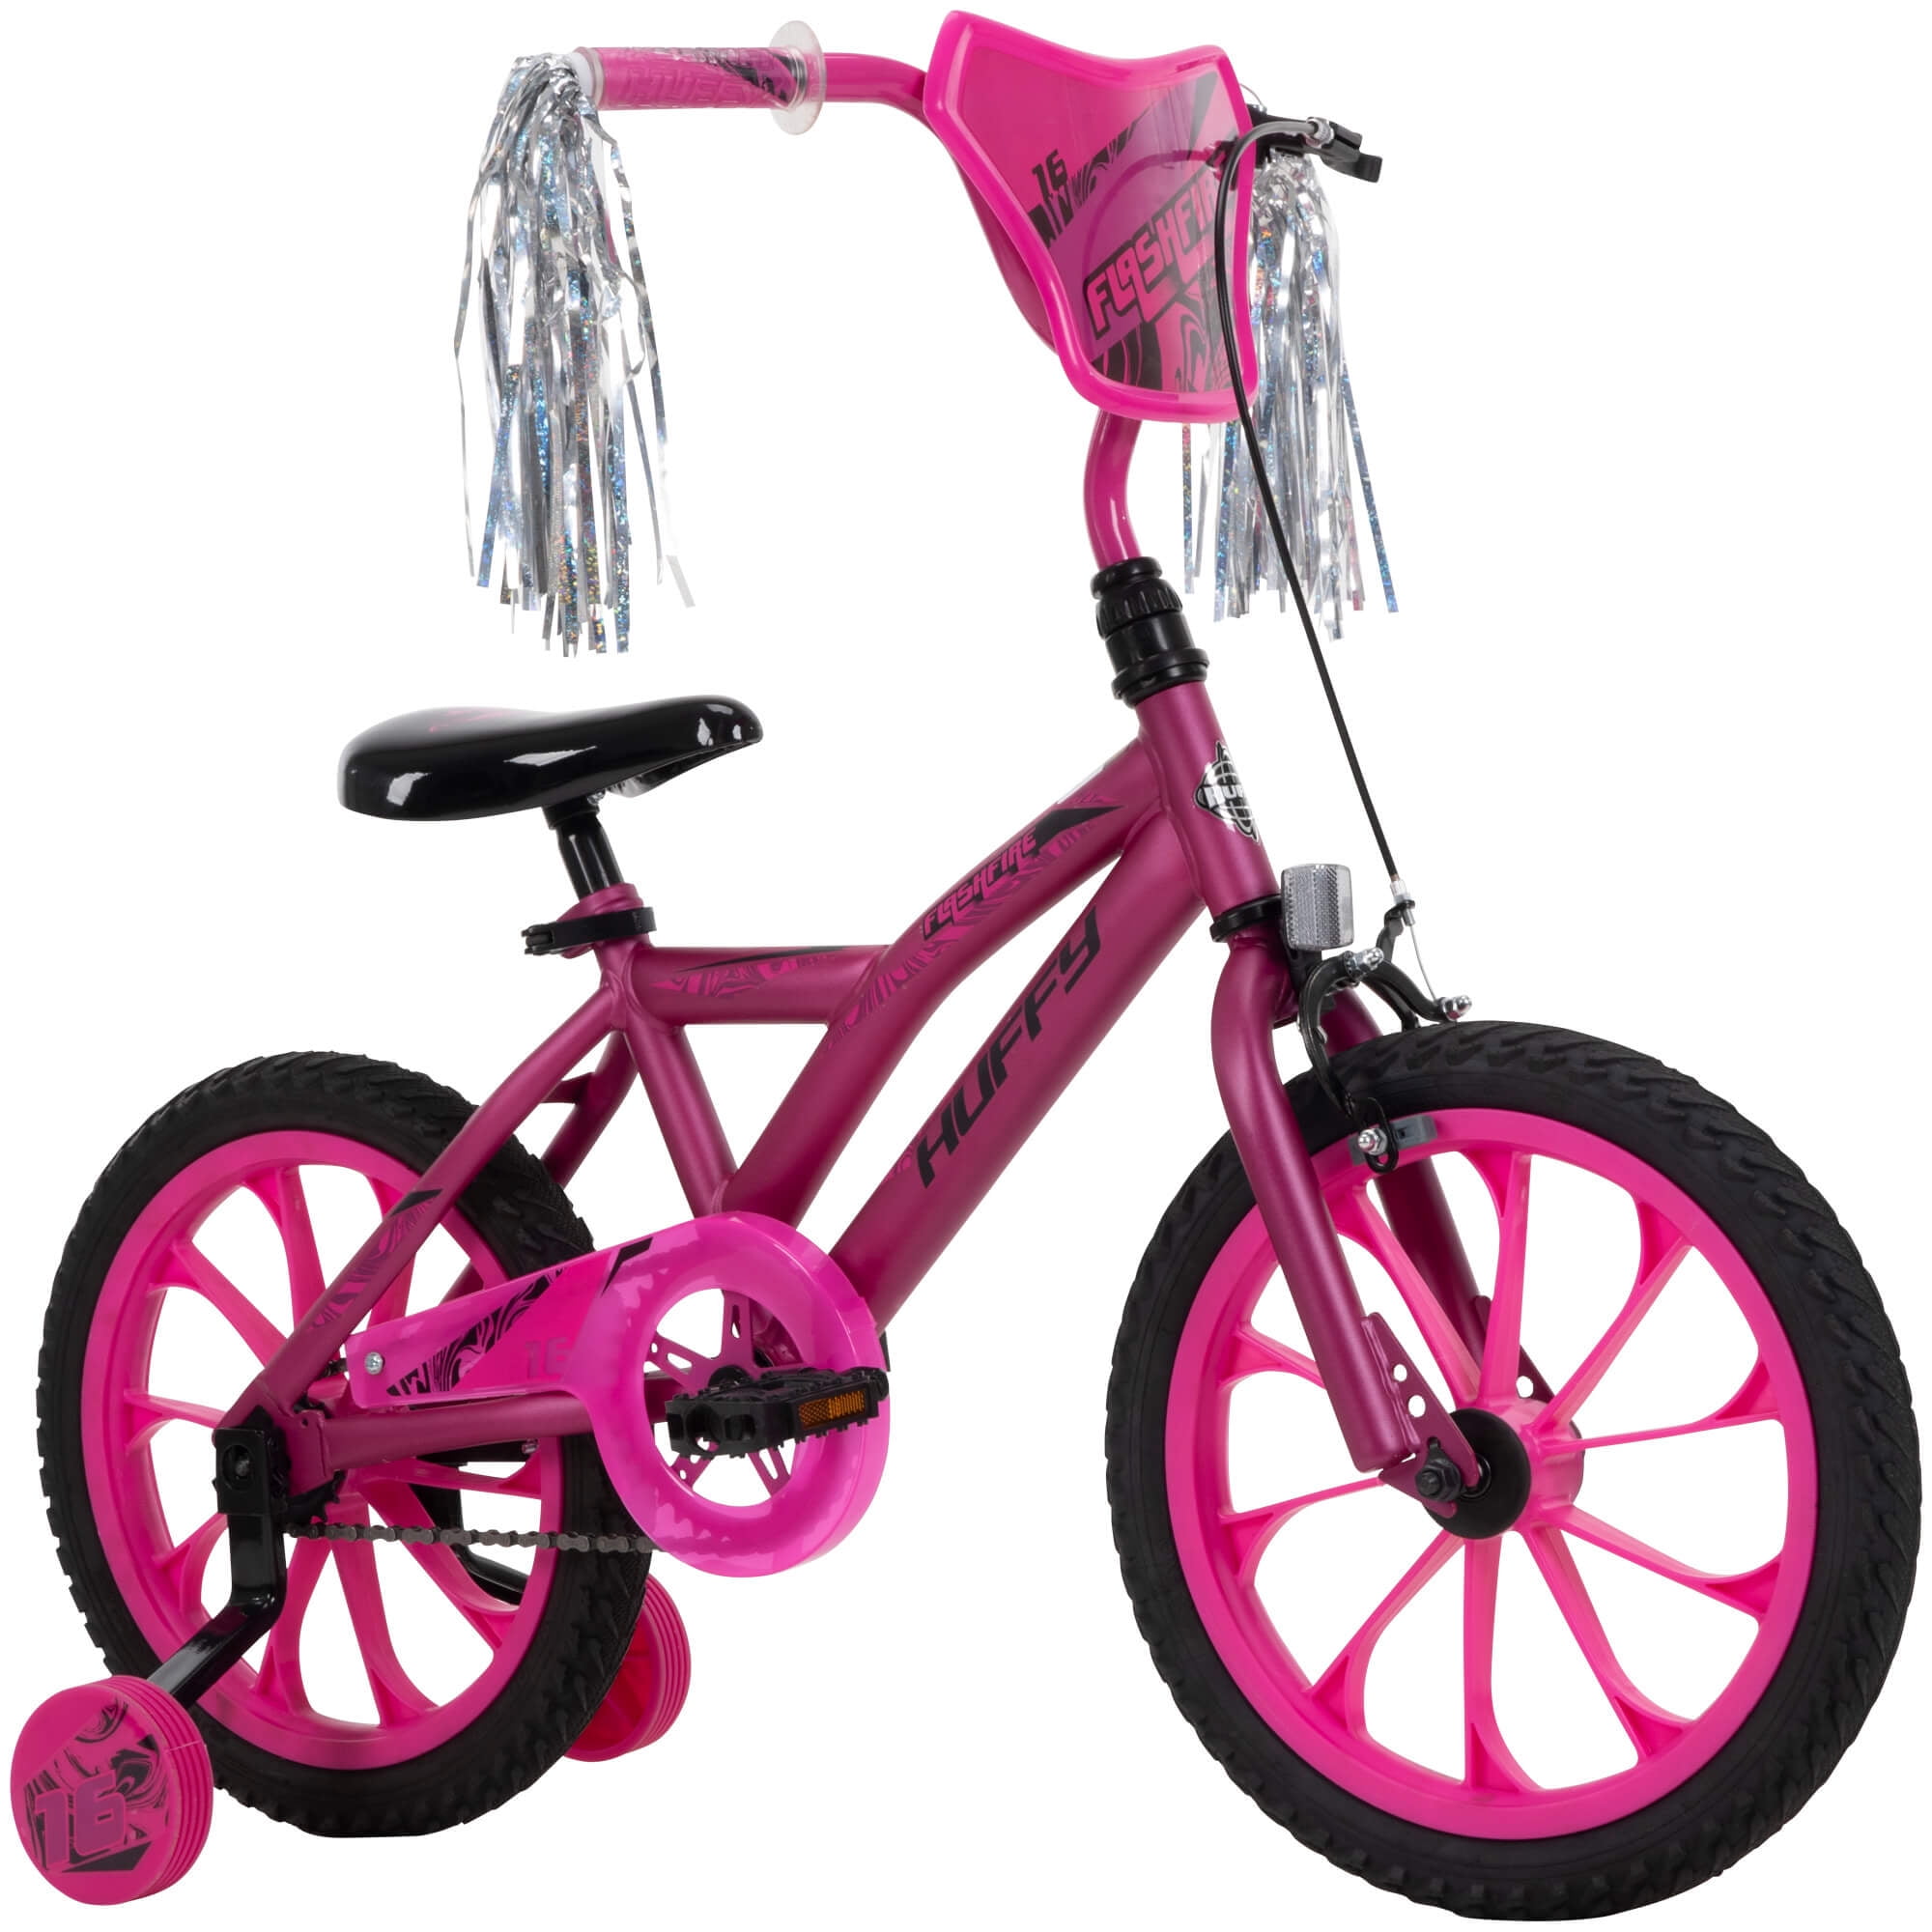 Kent BMX Bicycle 18" Aluminum Frame Girl Kids Bike Training Wheel Pegs New! 